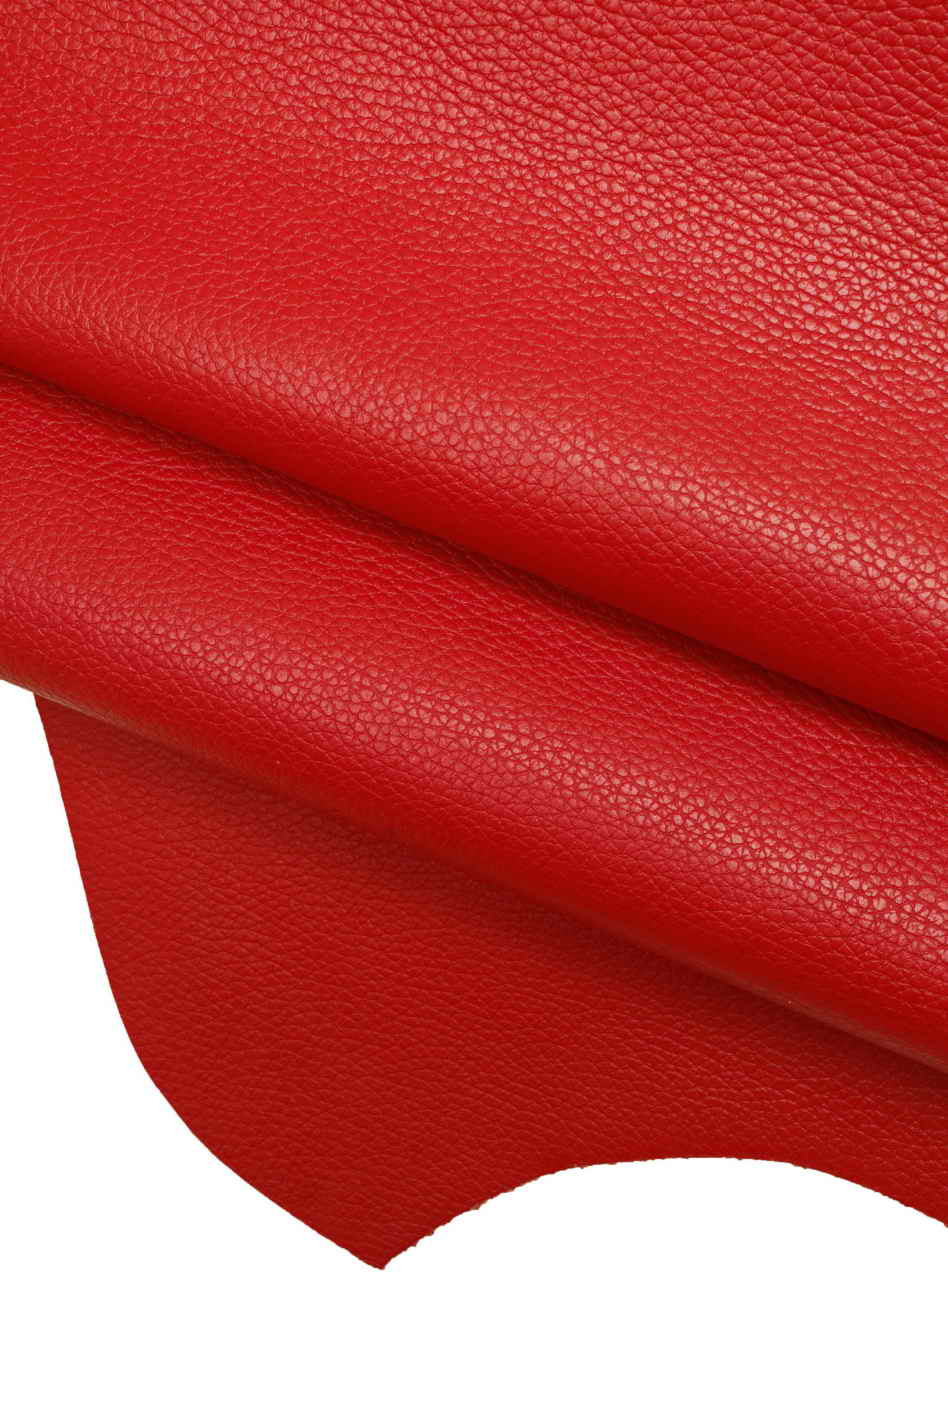 https://www.lagarzarara.com/27249-thickbox_default/italian-leather-red-half-calfskin-with-dollar-grain-print-semi-gloss-soft-sporty-look.jpg